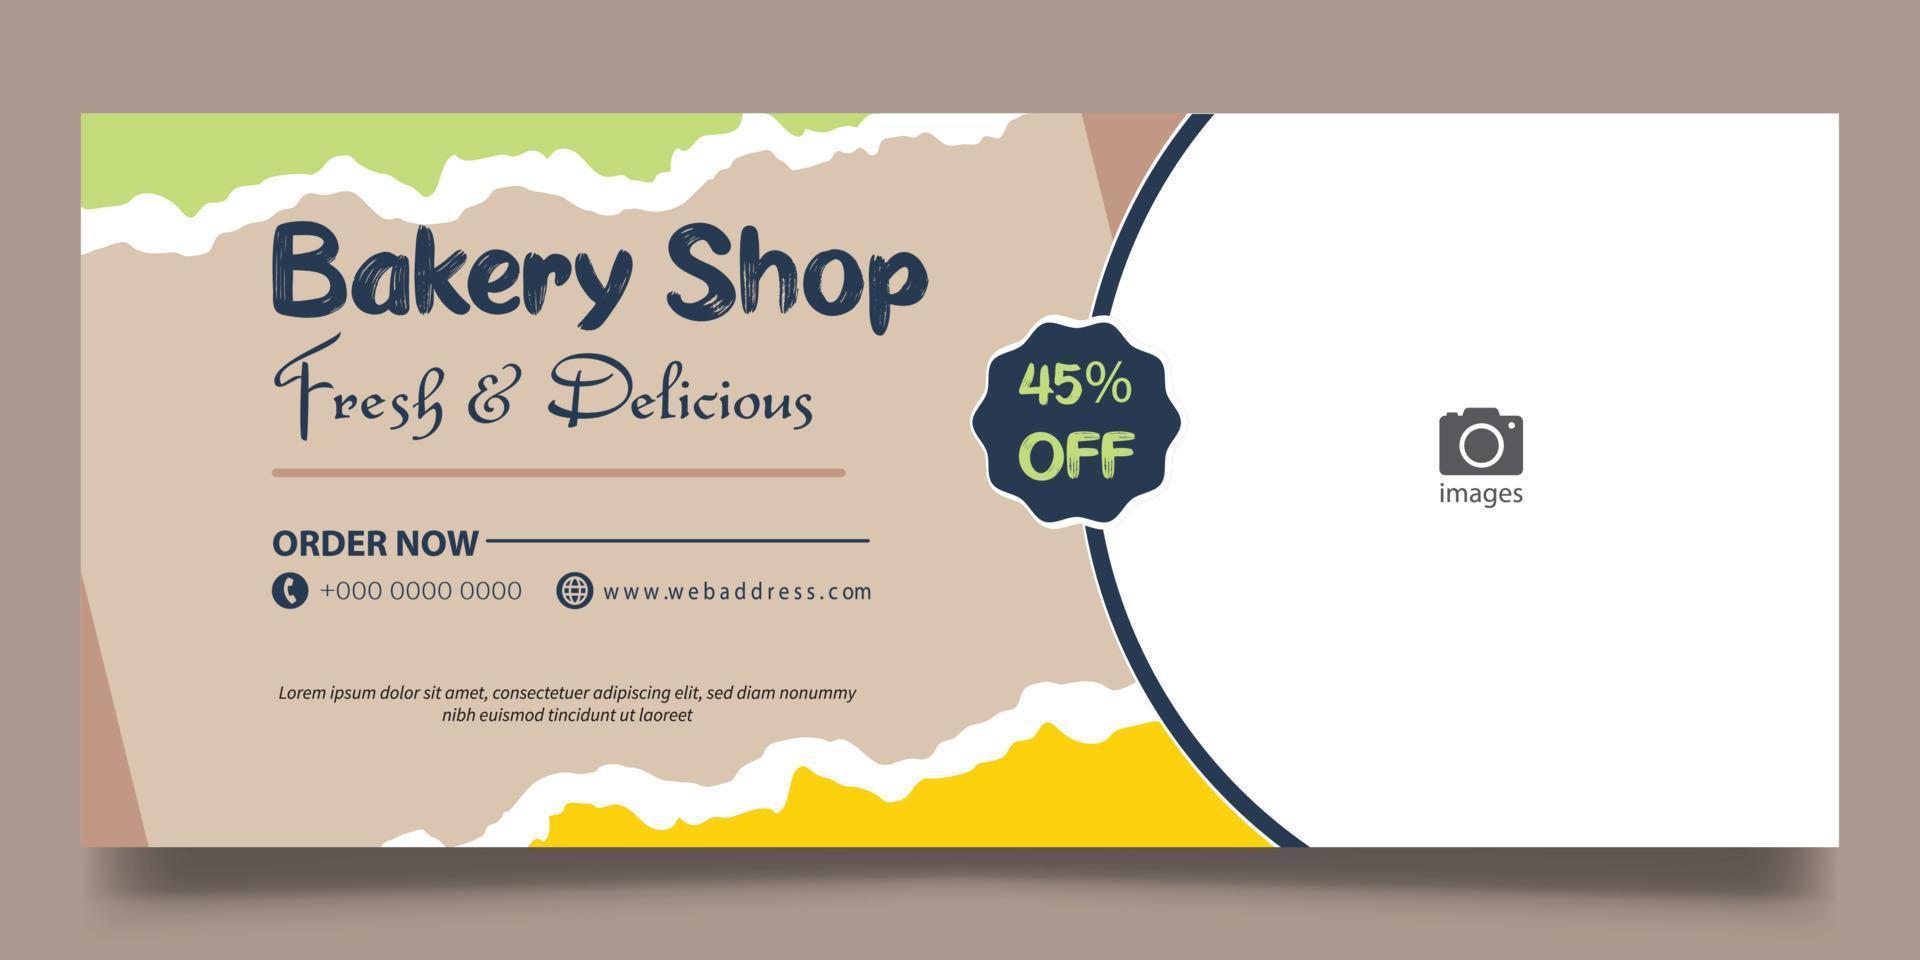 Bakery shop web banner vector